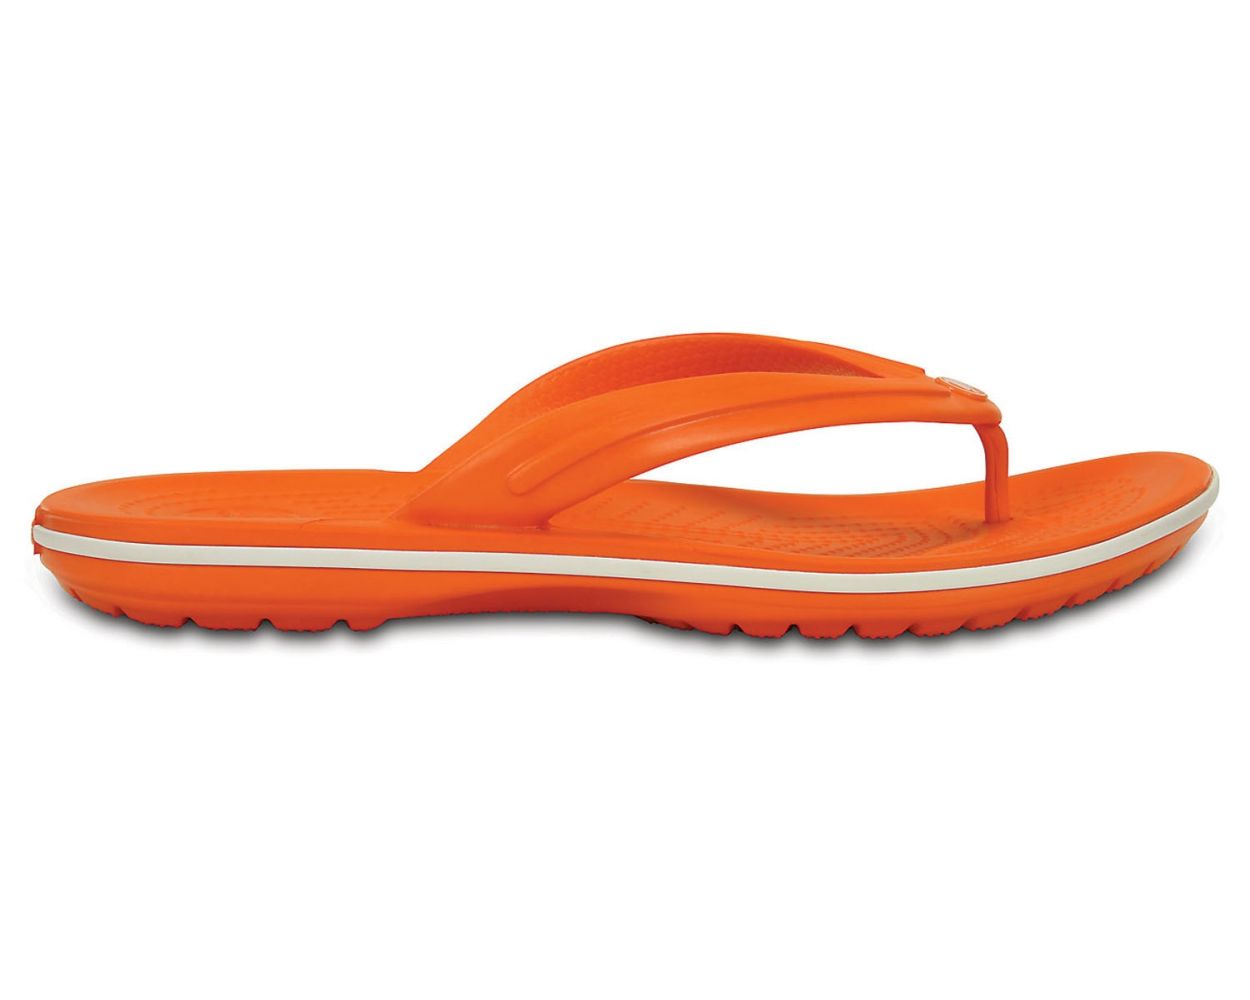 Crocs Crocband Flip - Orange/White